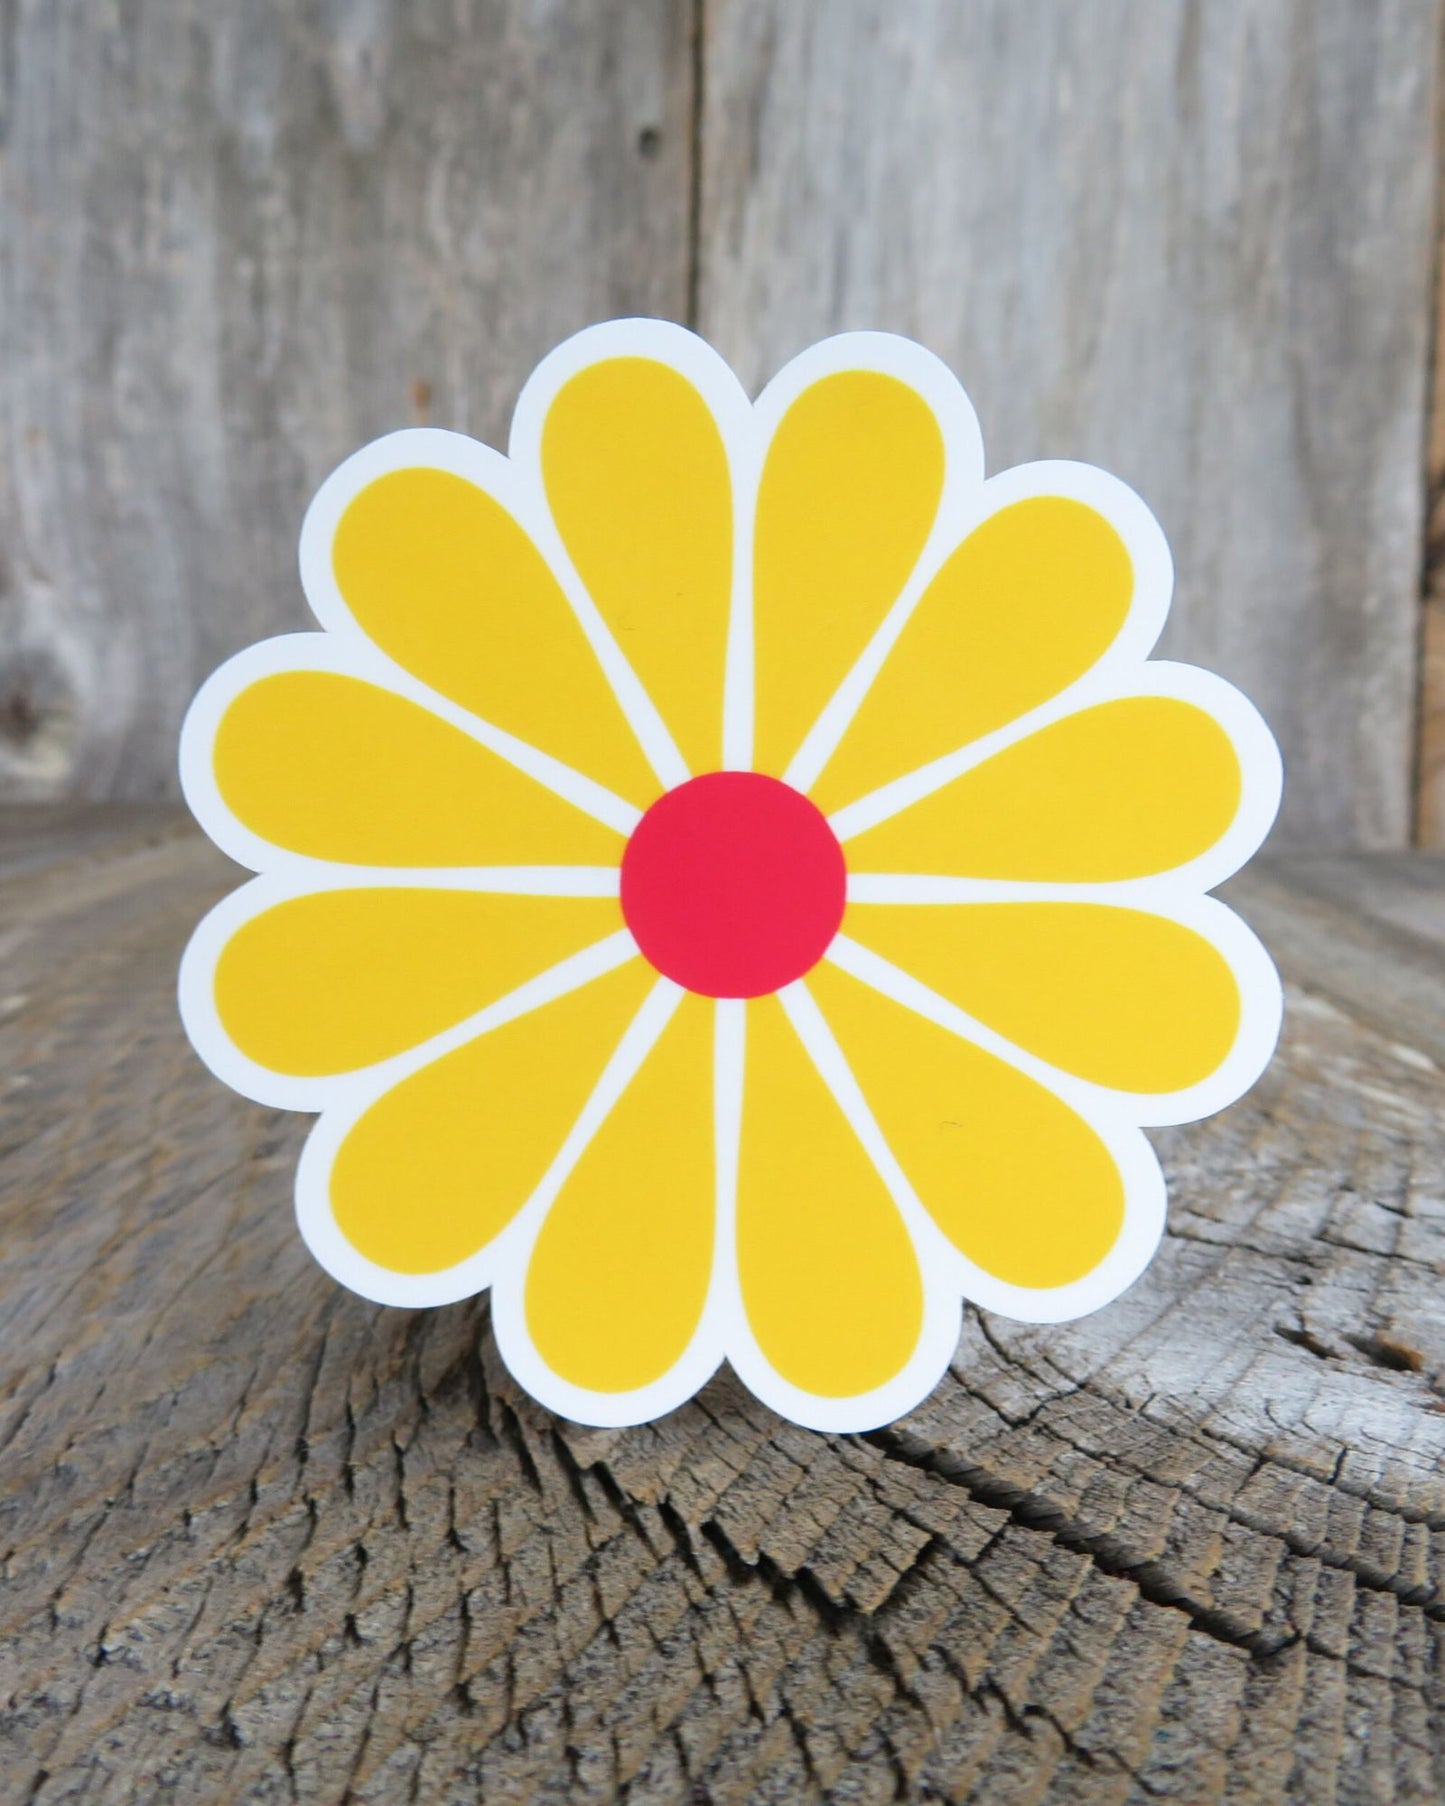 Retro Style Daisy Flower Sticker Yellow Waterproof Full Color Groovy 70's Flower Power